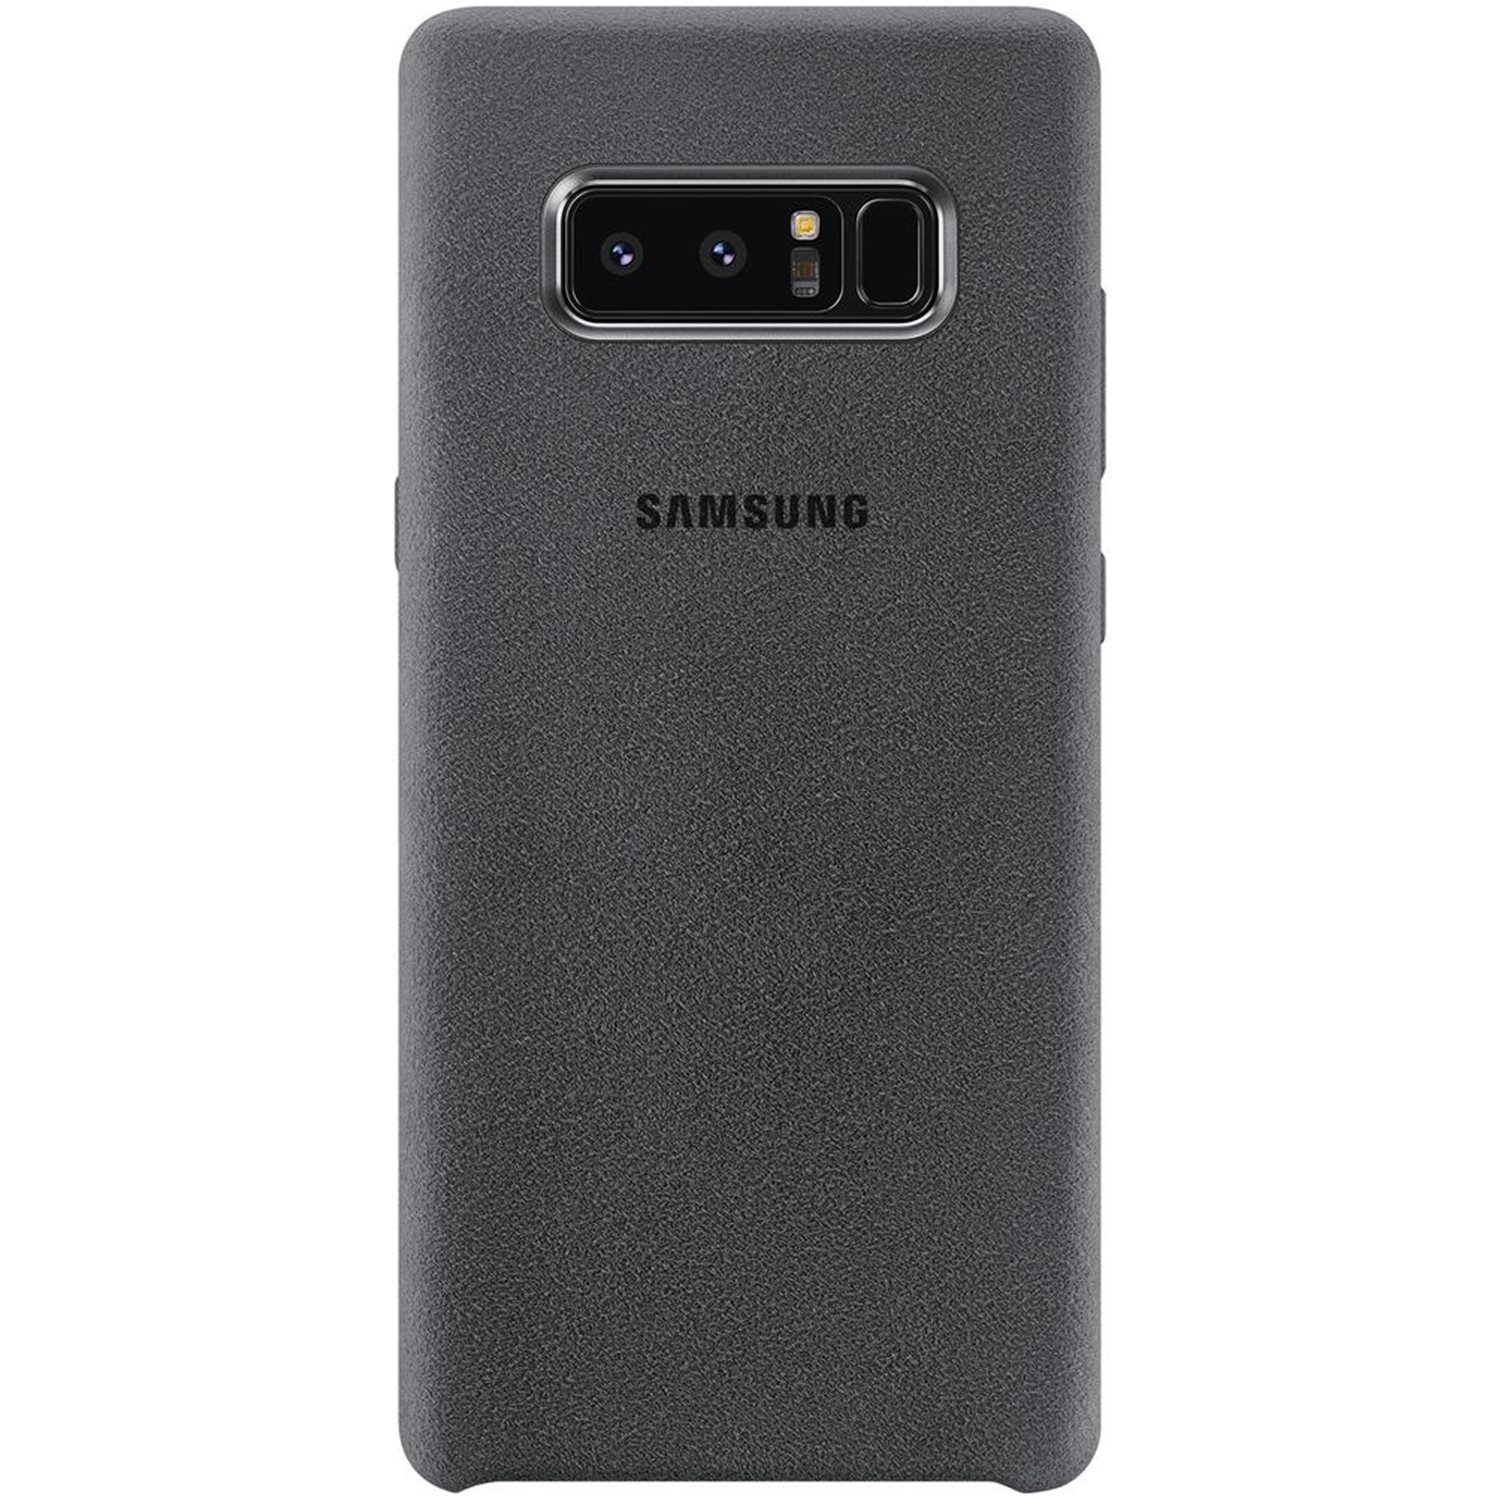 Official Samsung Galaxy Note 8 Alcantara Cover Case - Dark Grey